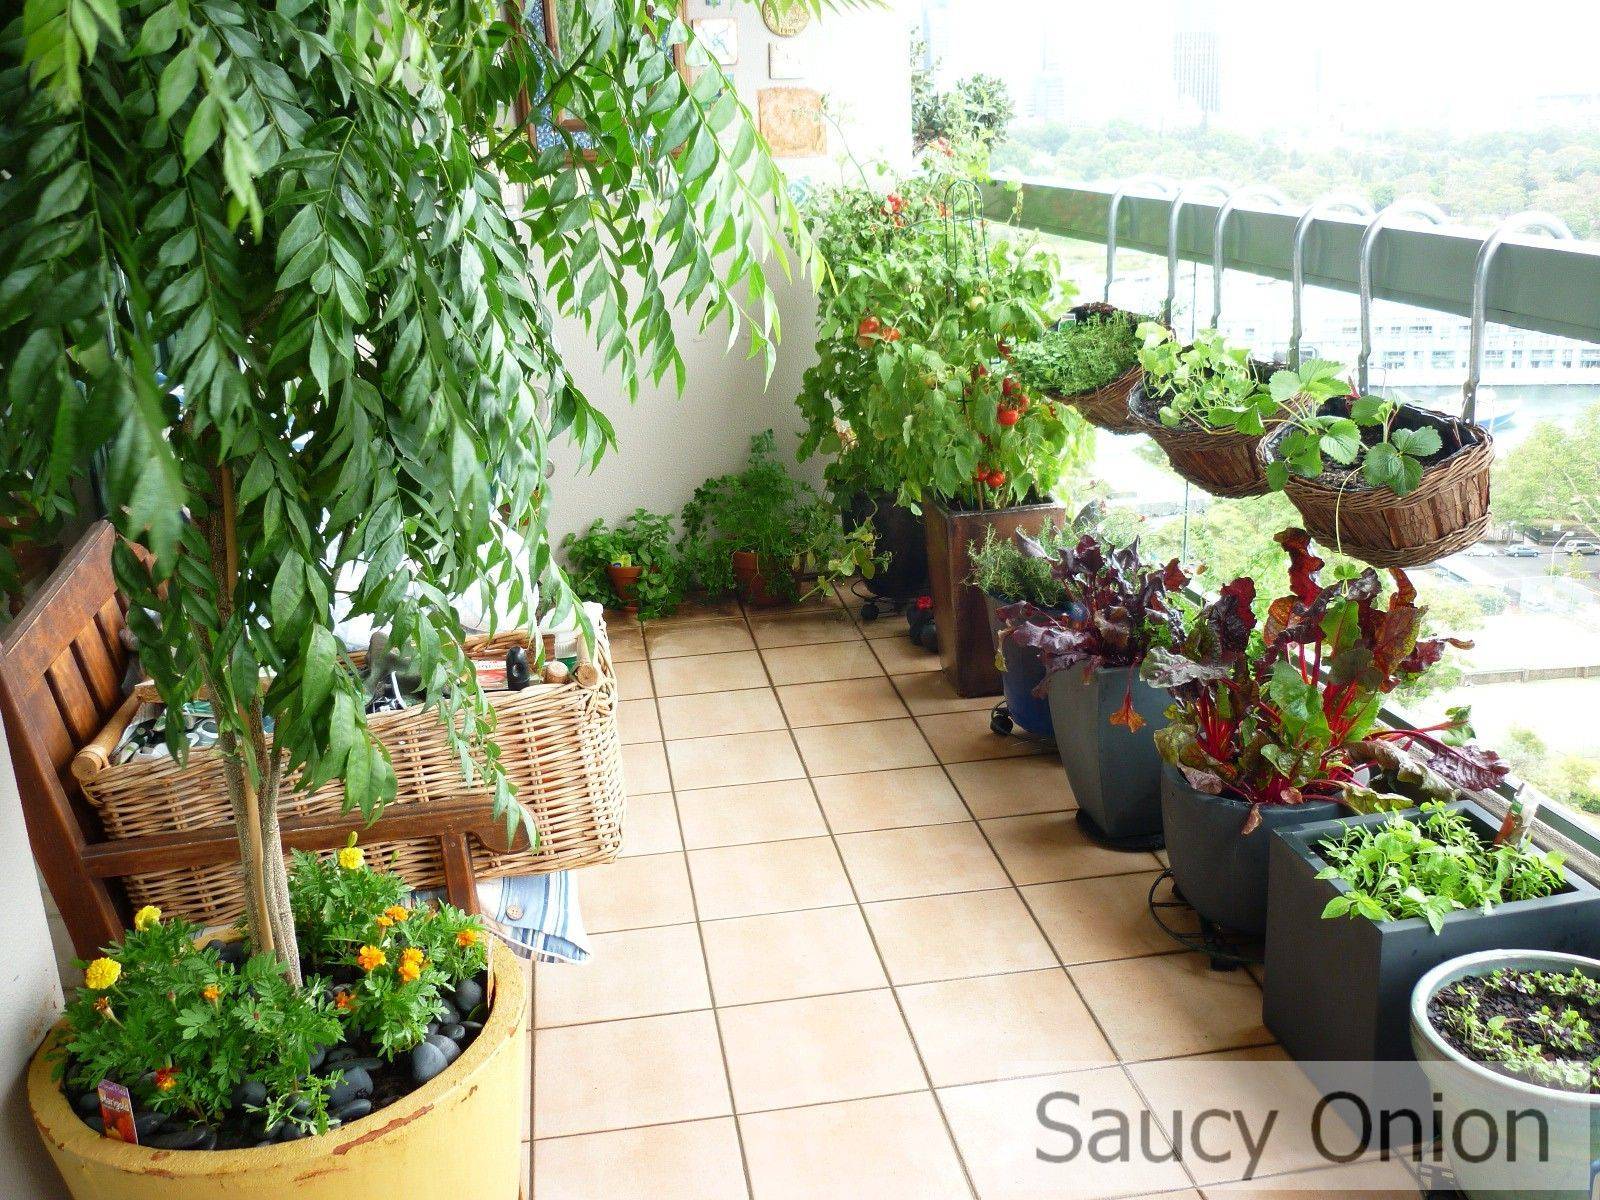 Beautiful Apartment Balcony Vegetable Garden Ideas Balcony